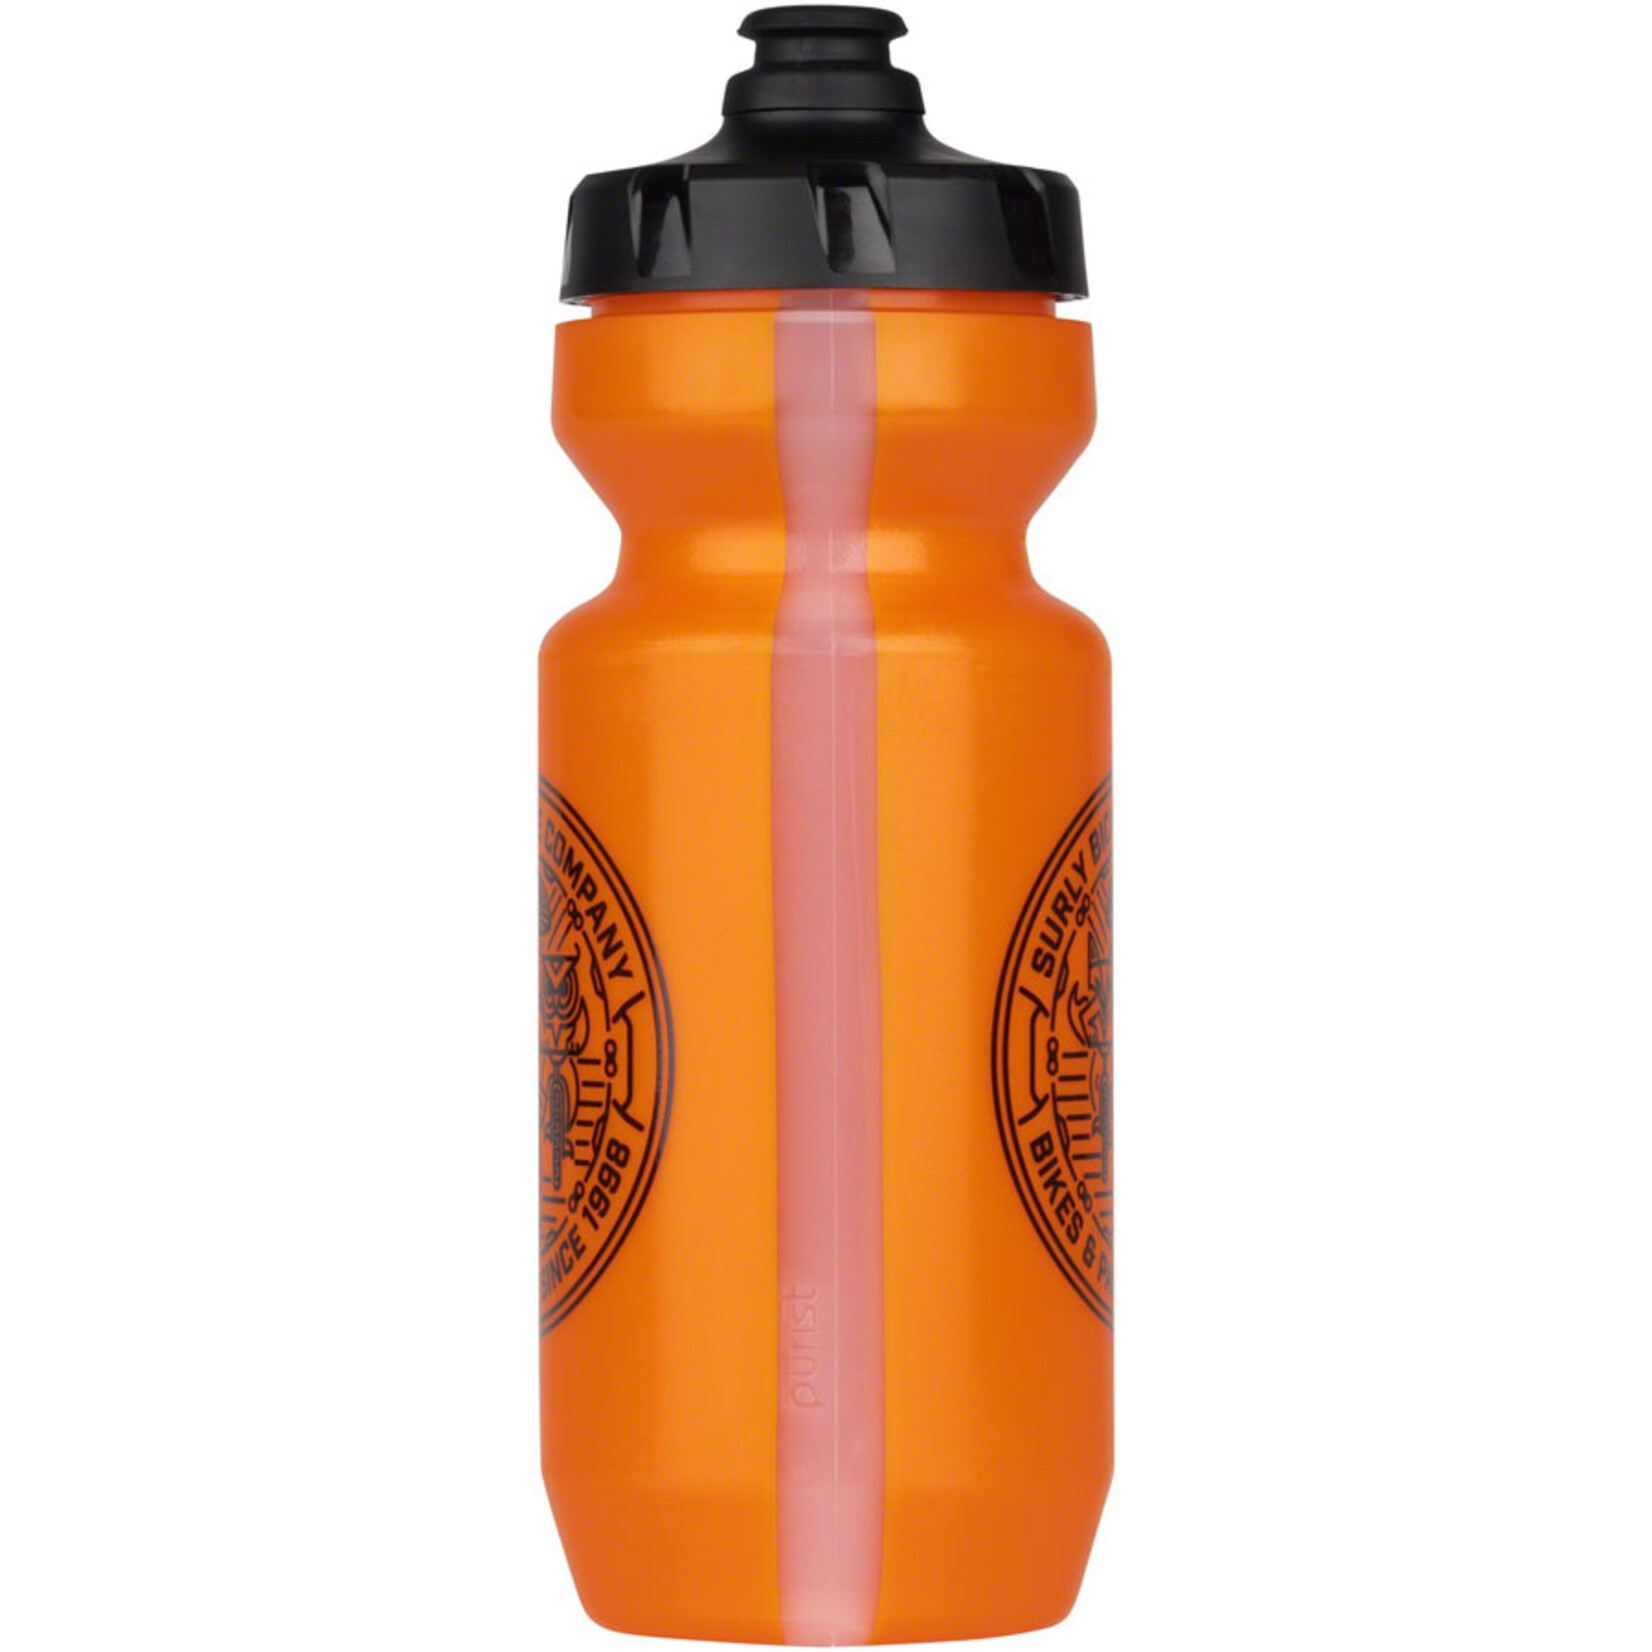 Surly Surly Monster Squad Water Bottle - Orange, 22oz